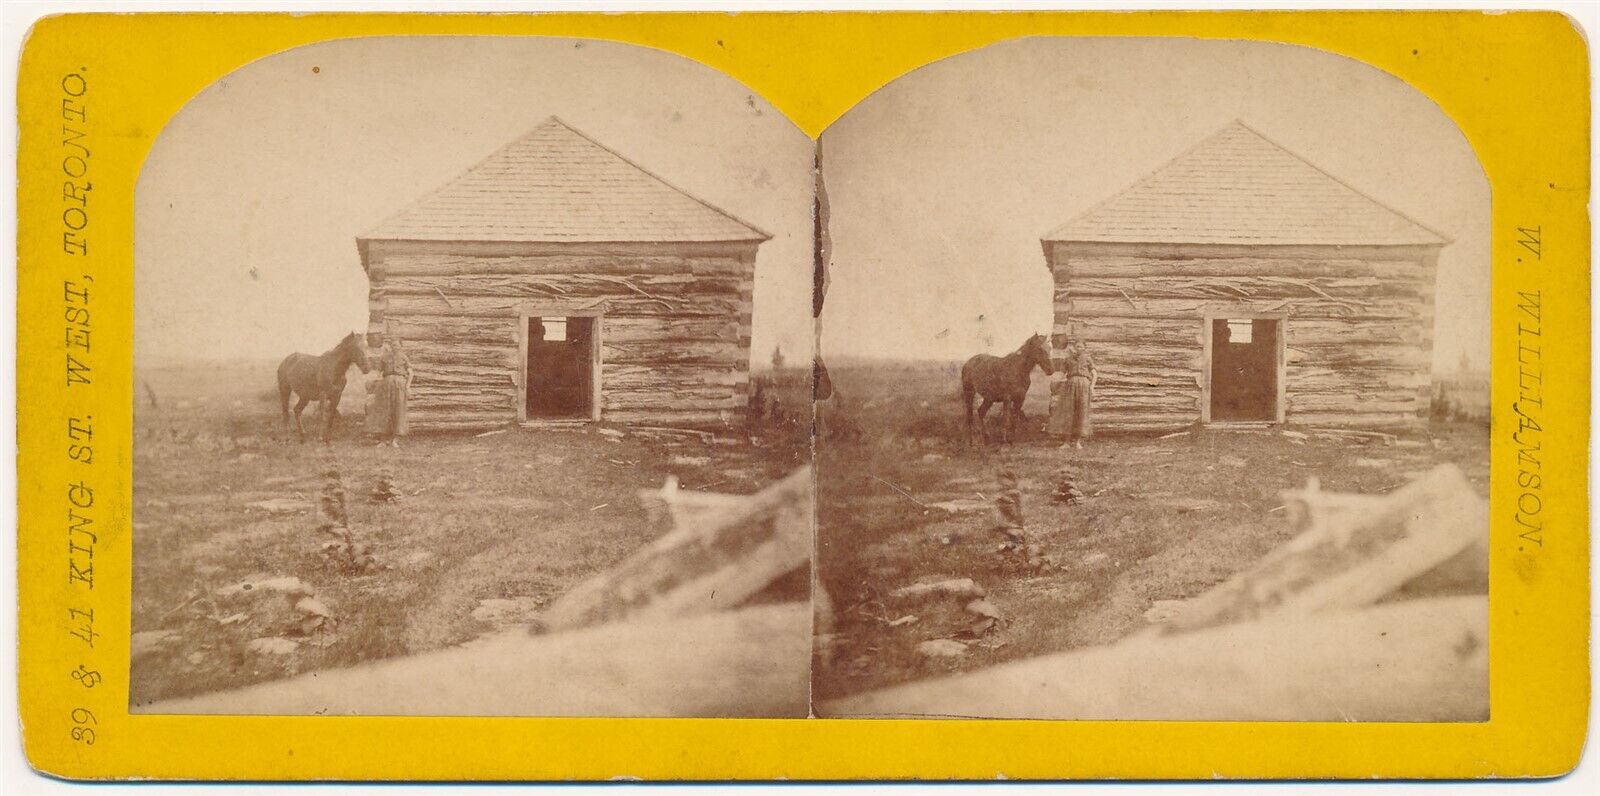 CANADA SV - Western Prairie Cabin - W. Williamson 1870s